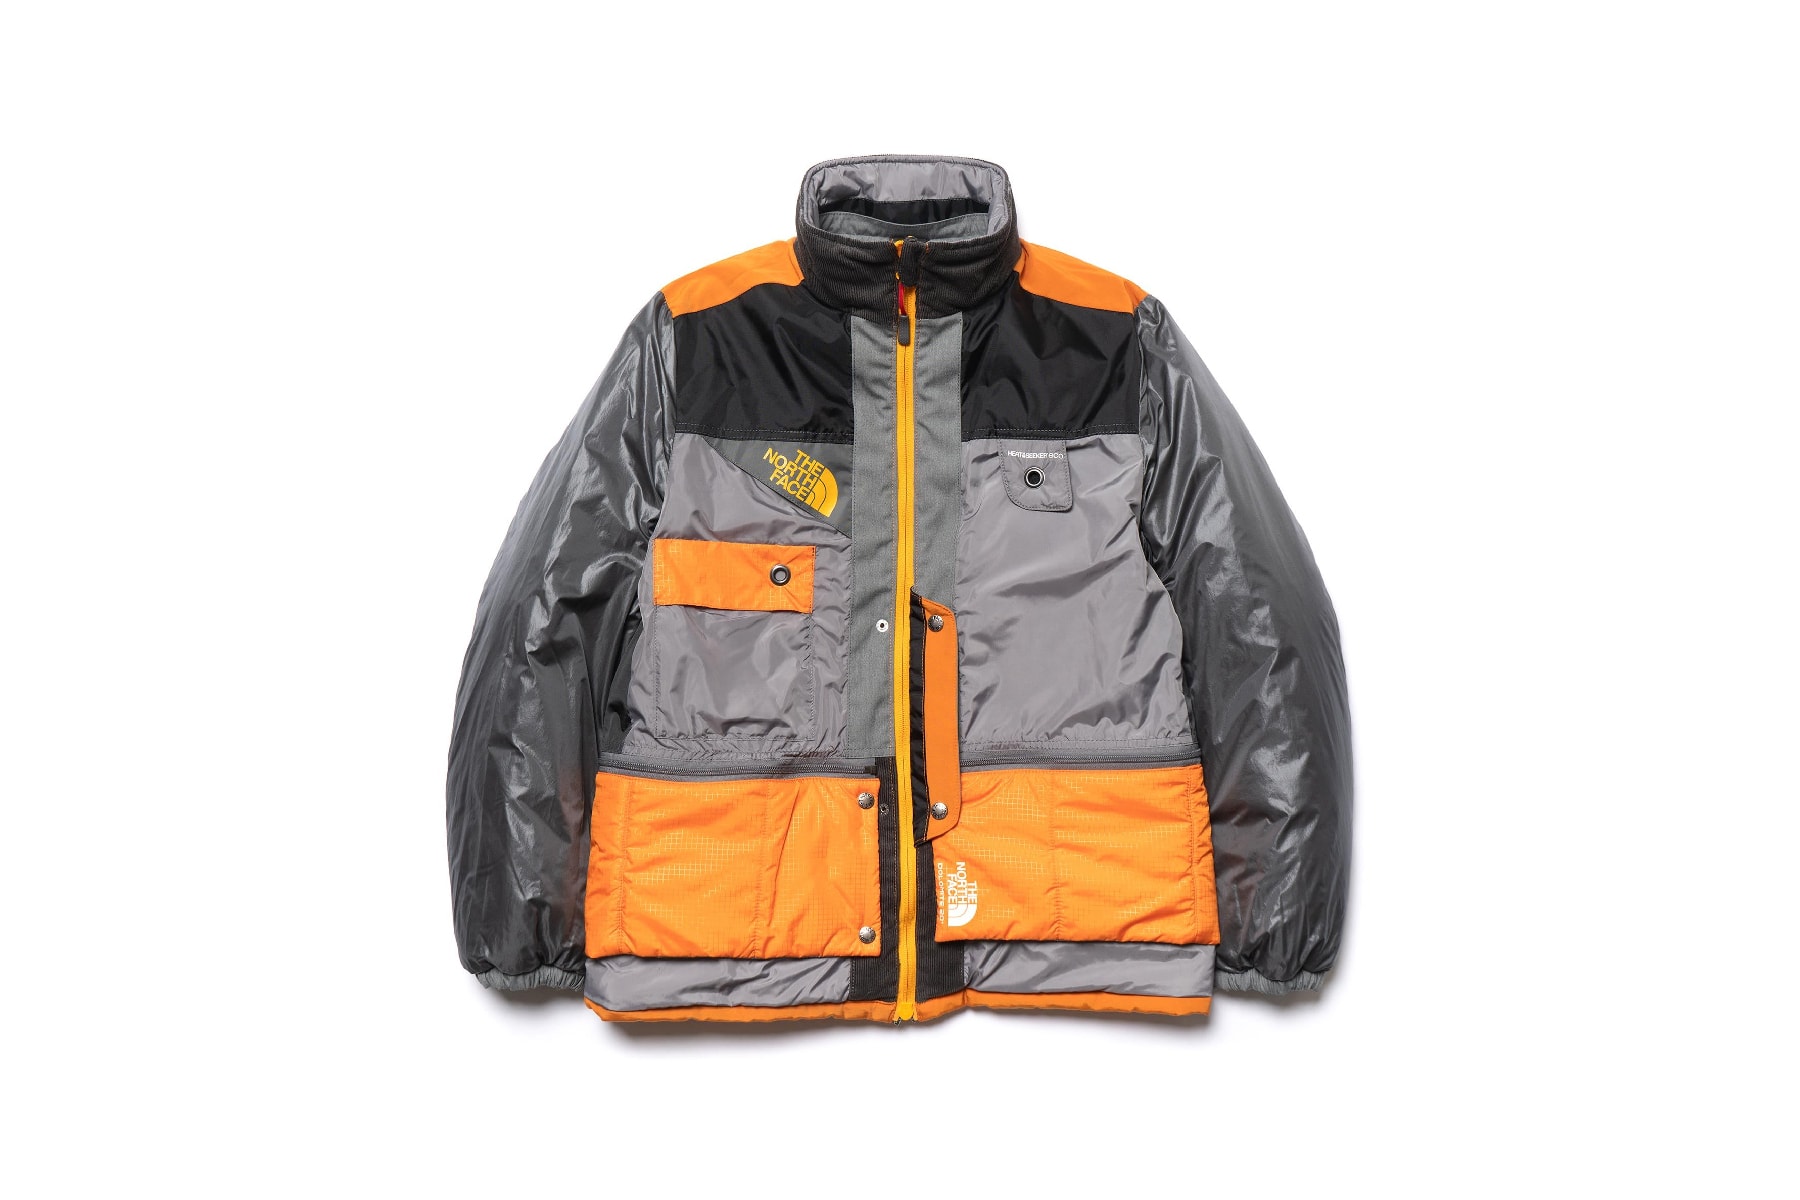 The North Face Junya Watanabe MAN Dolomite Sleeping Bag Jacket Orange Grey release info